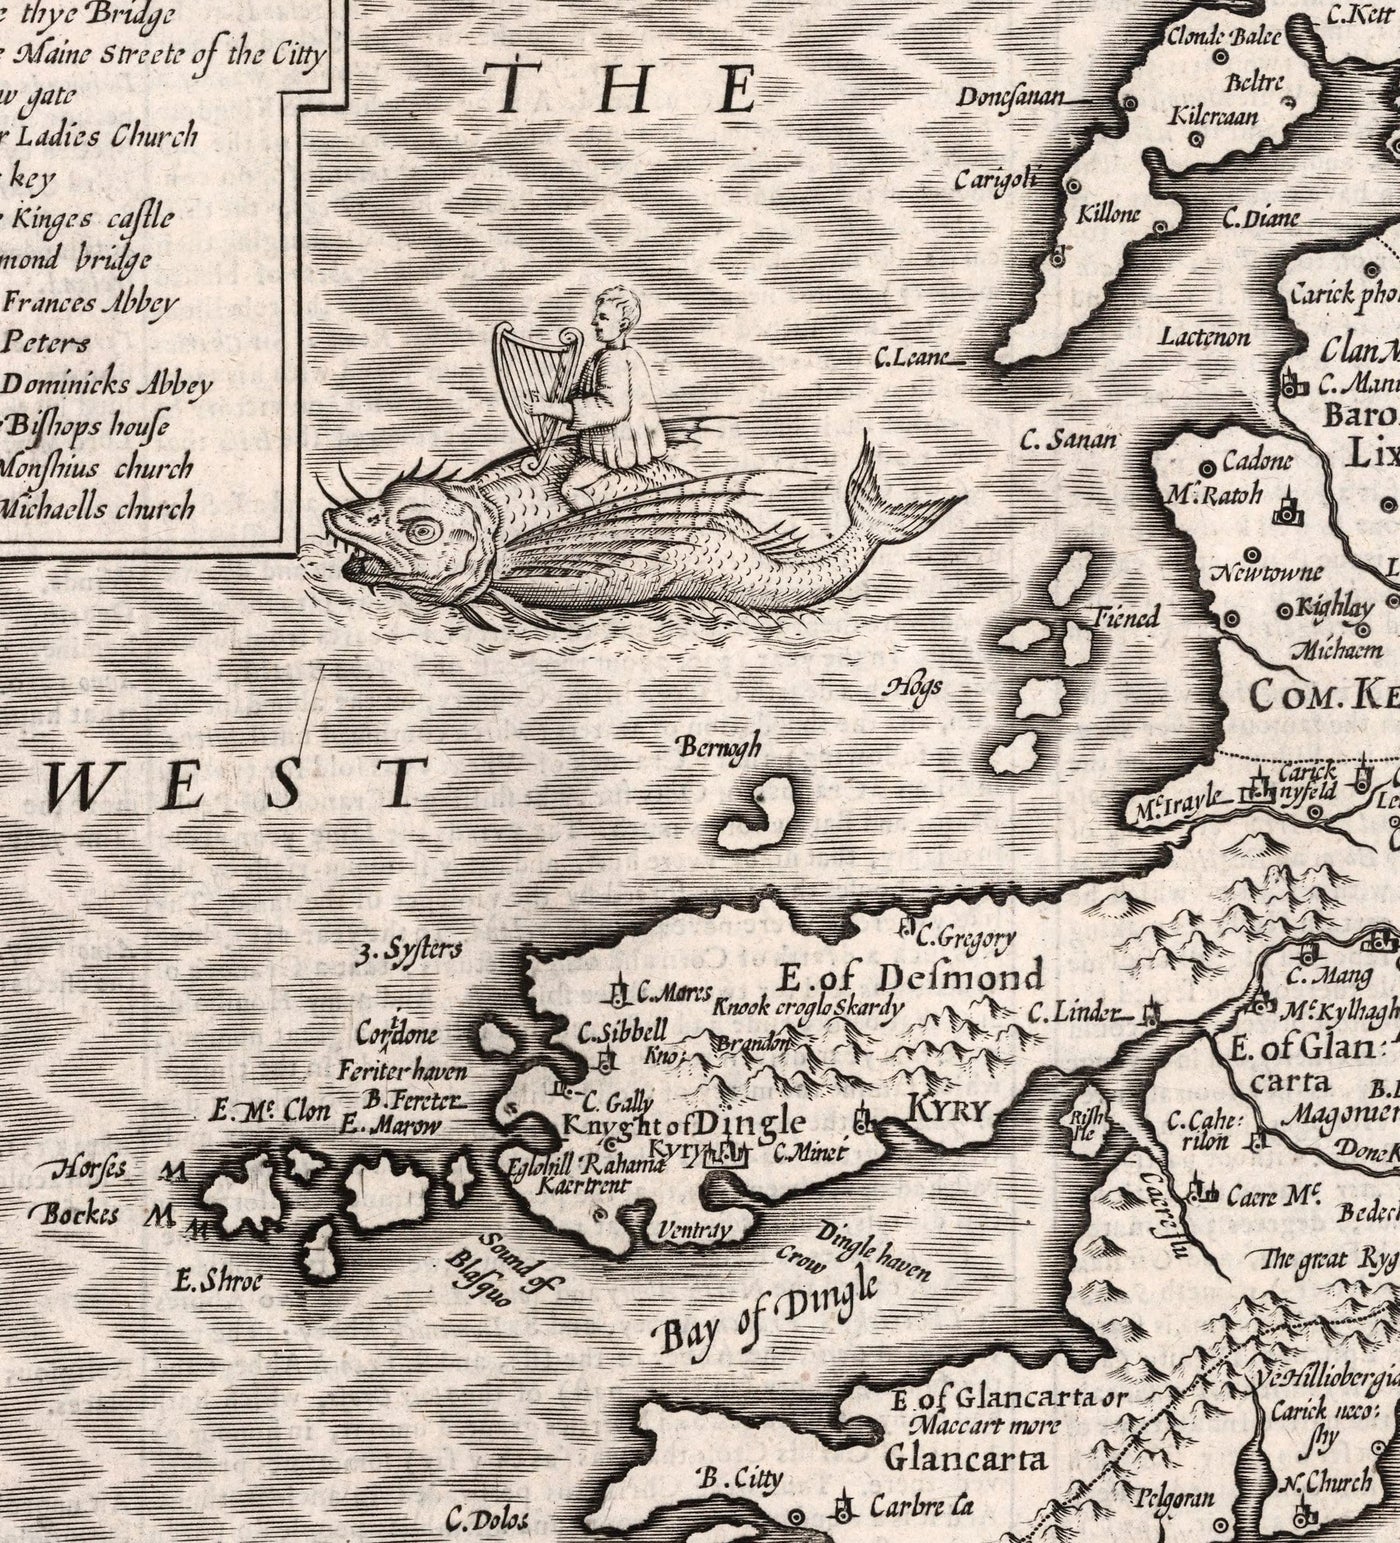 Vieille carte monochrome de Munster, Irlande en 1611 par John Speed ​​- County Cork, Clare, Kerry, Limerick, Tipperary, Waterford, Dingle